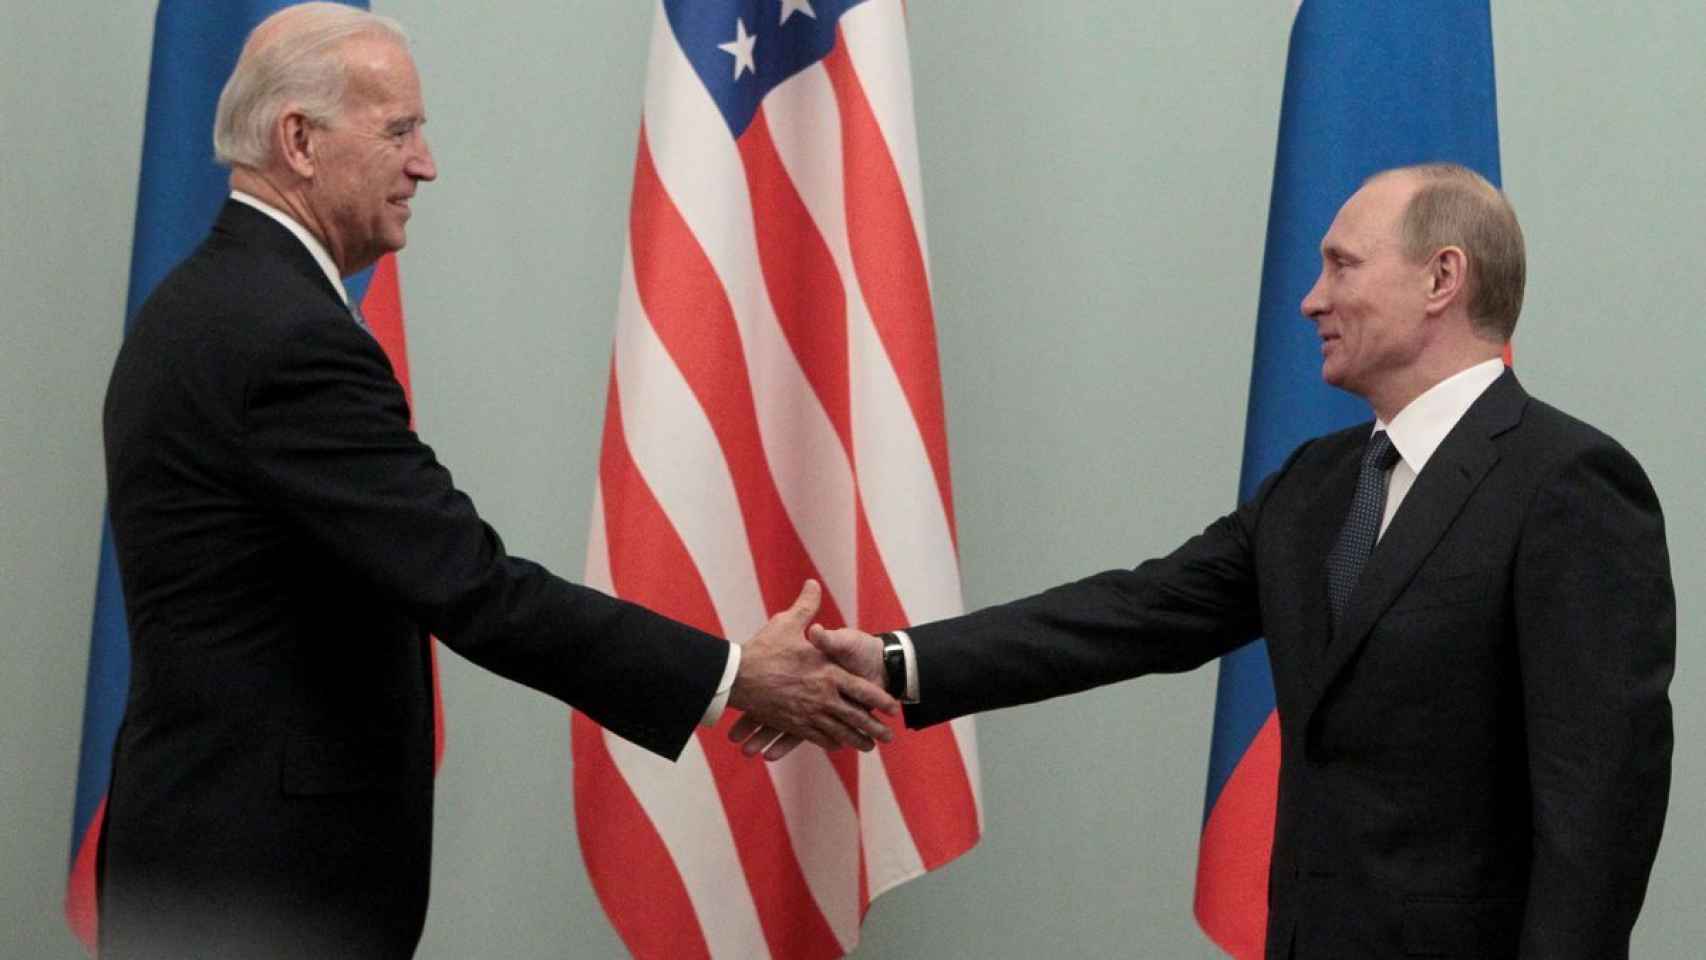 Joe Biden y Vladimir Putin en una imagen de archivo.